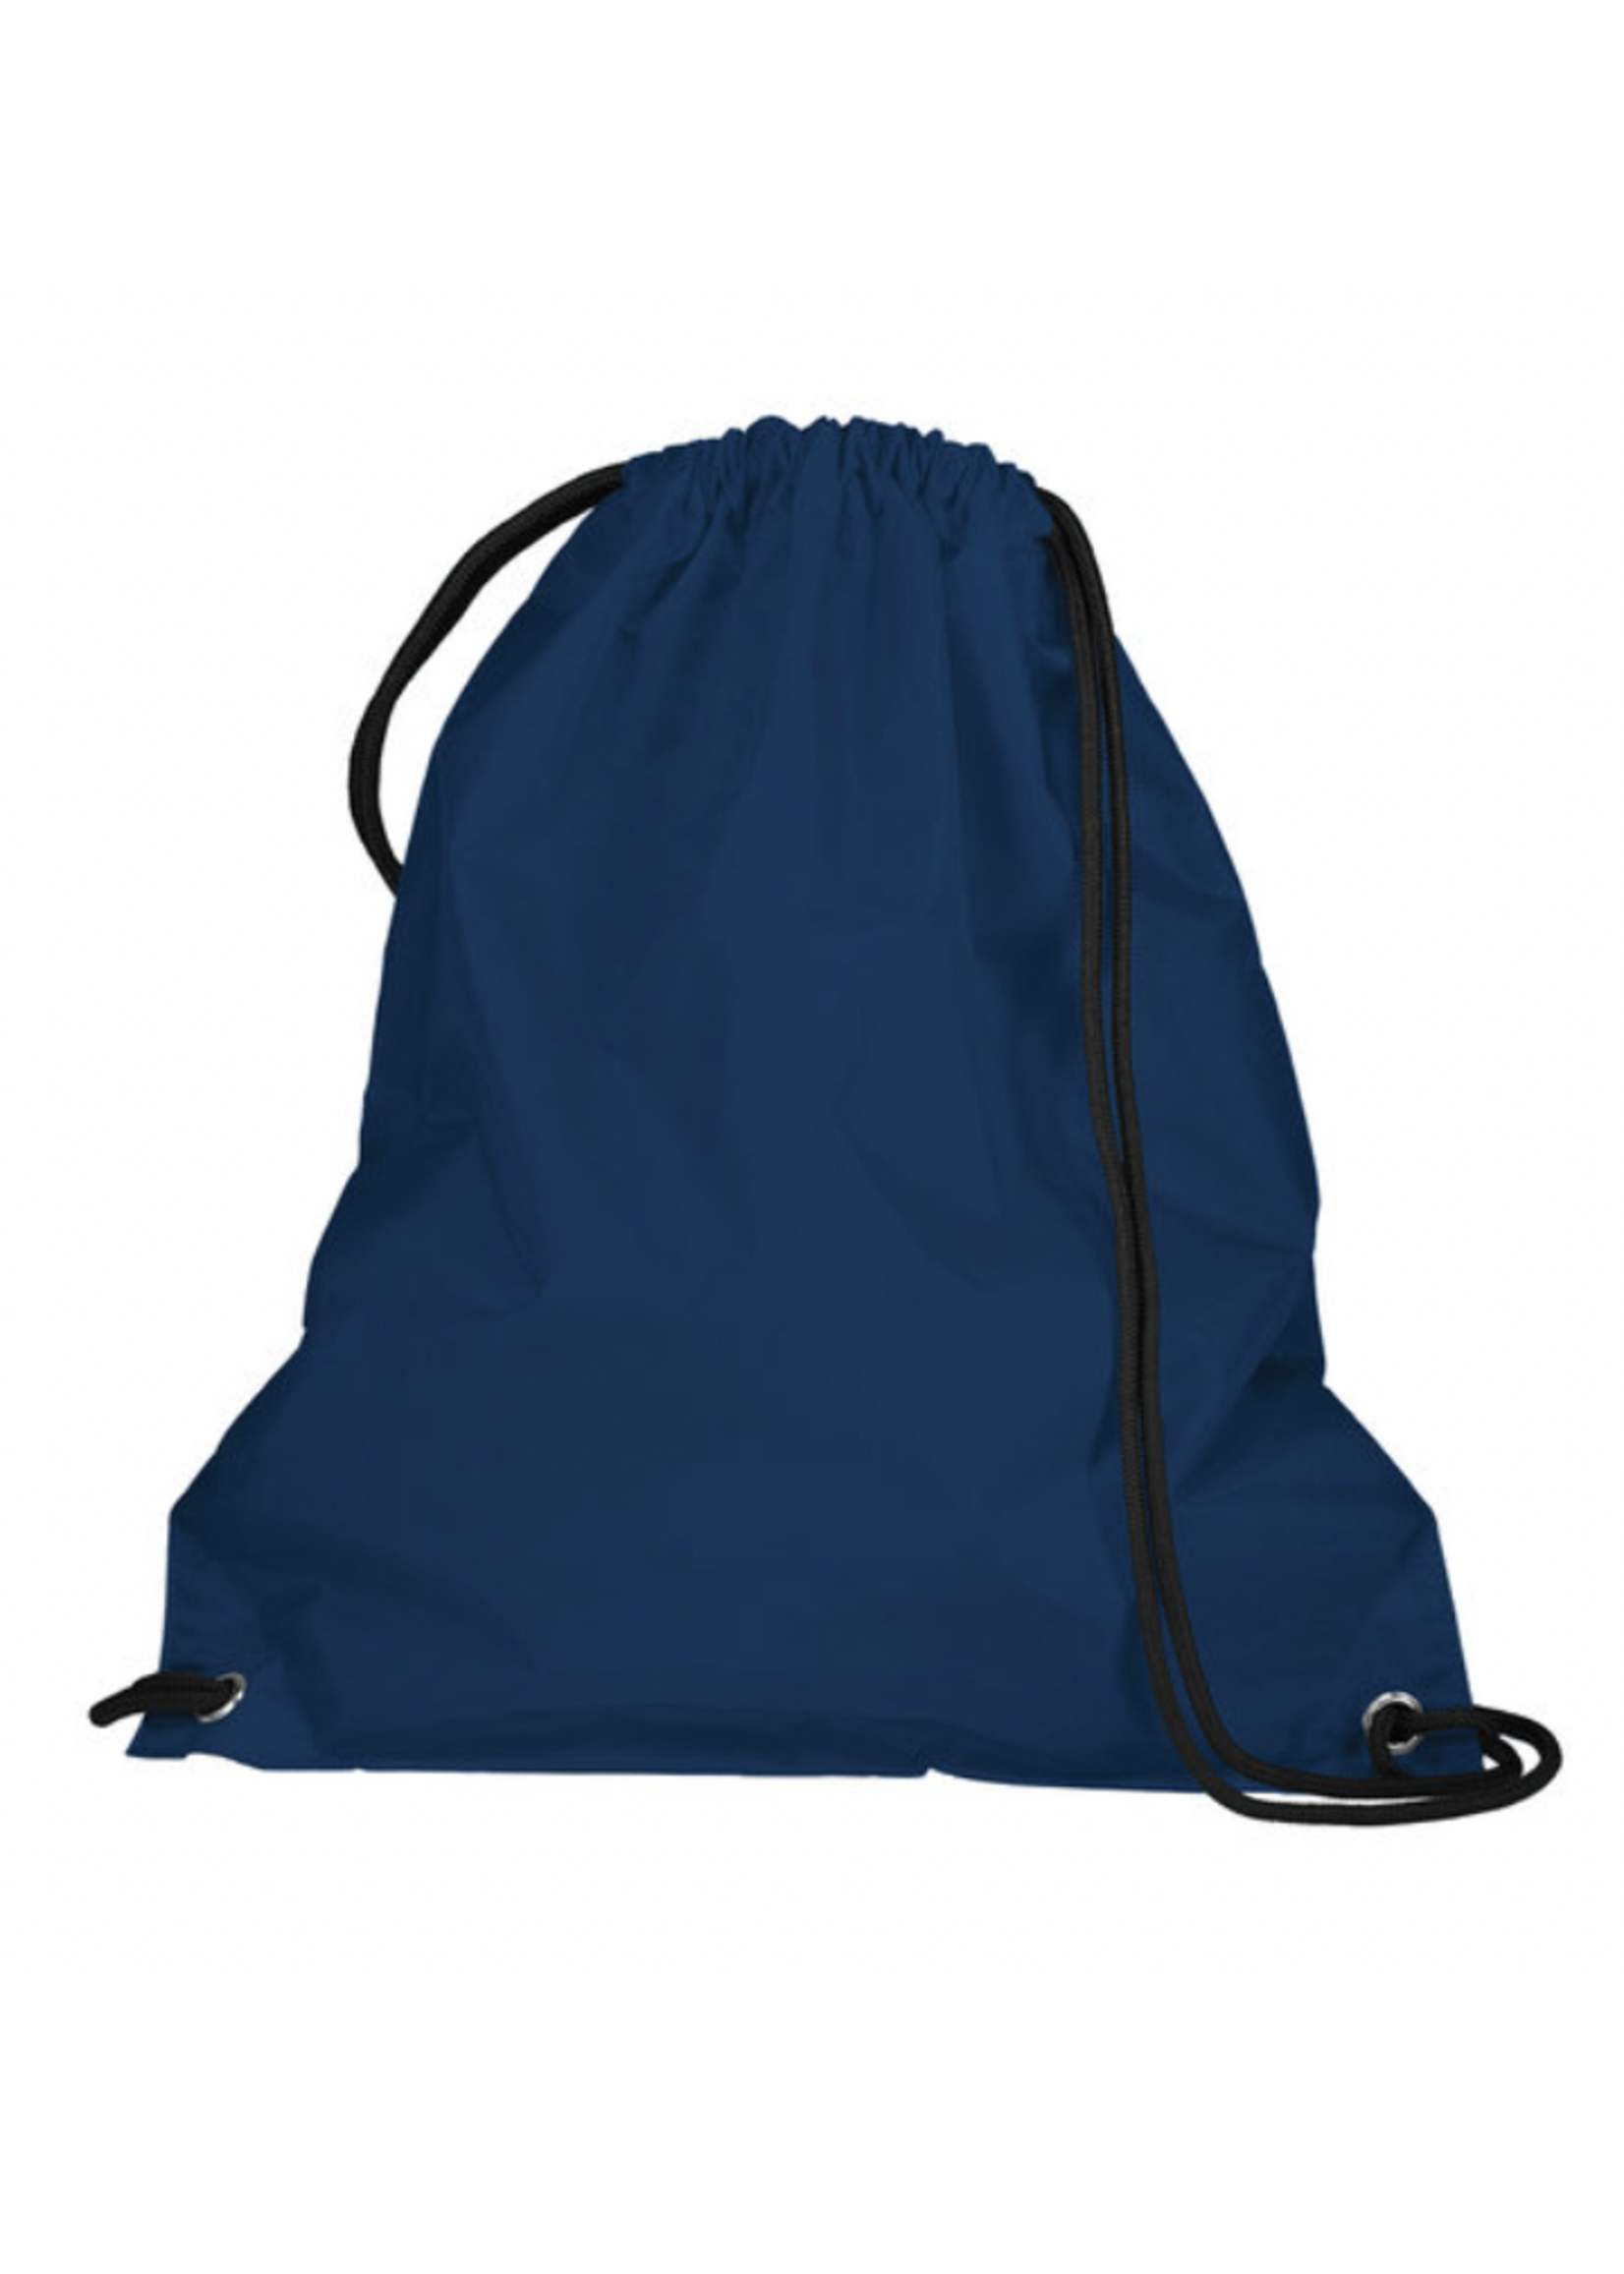 NON-UNIFORM Bag - Sportswear Cinch Bag, navy